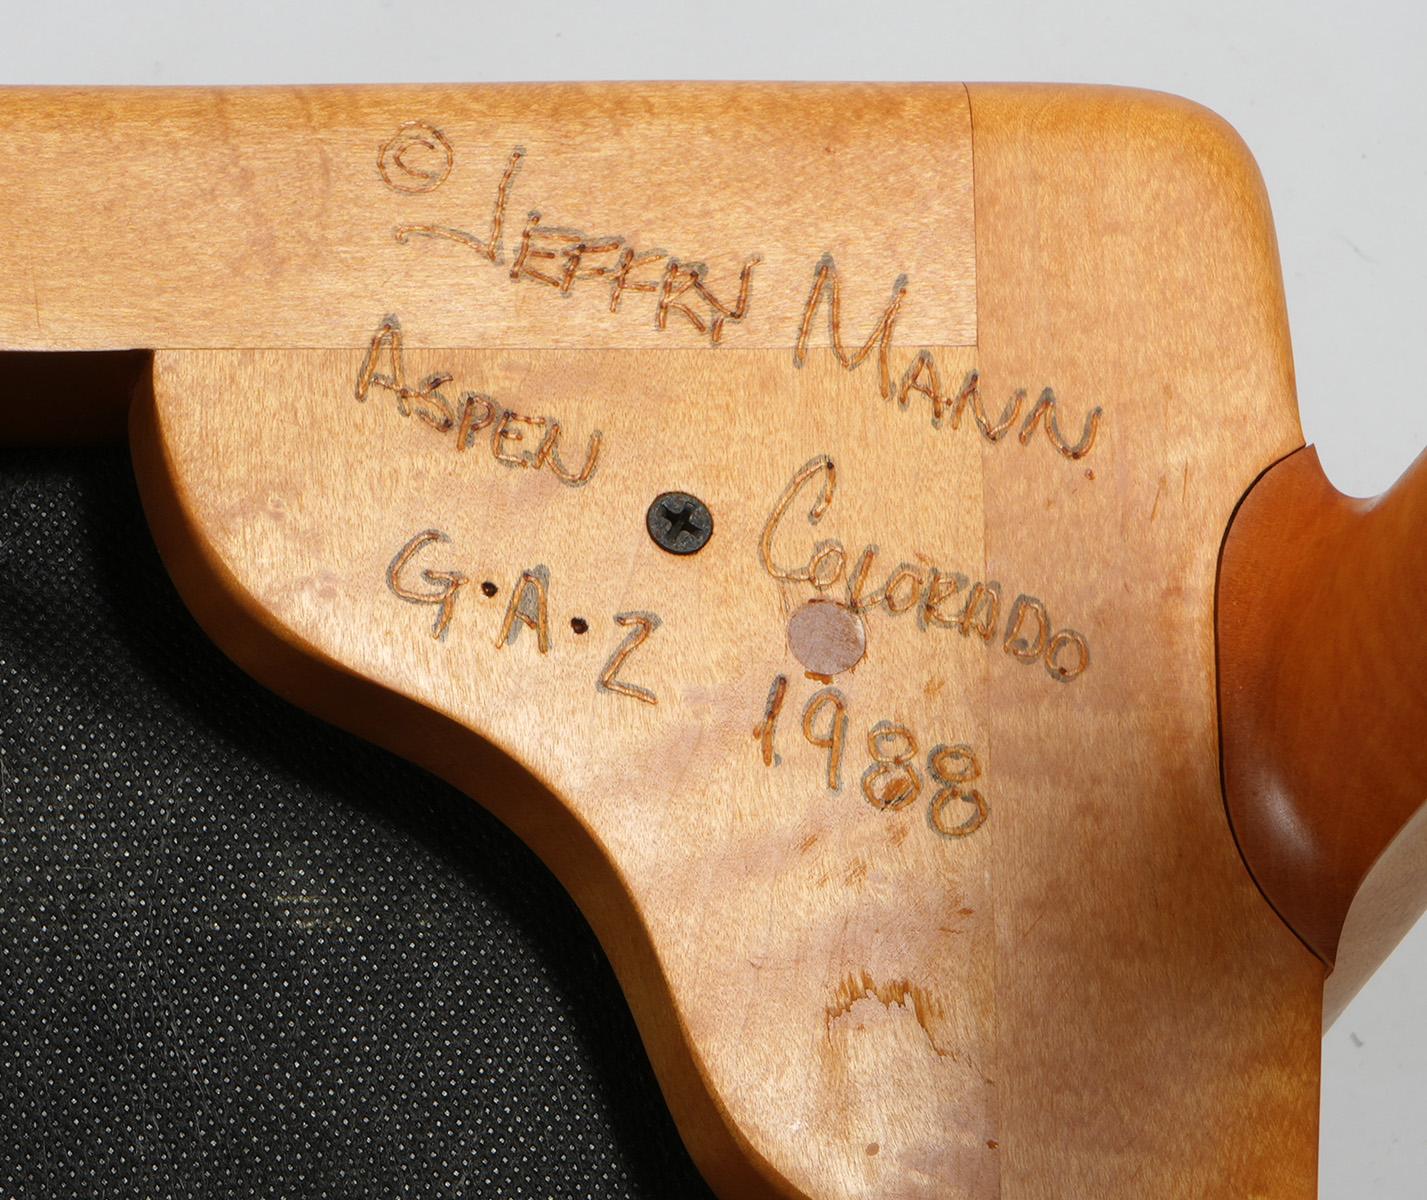 Jeffry Mann Handcrafted Artisan Studio Rocker 1988 Aspen Colorado For Sale 4